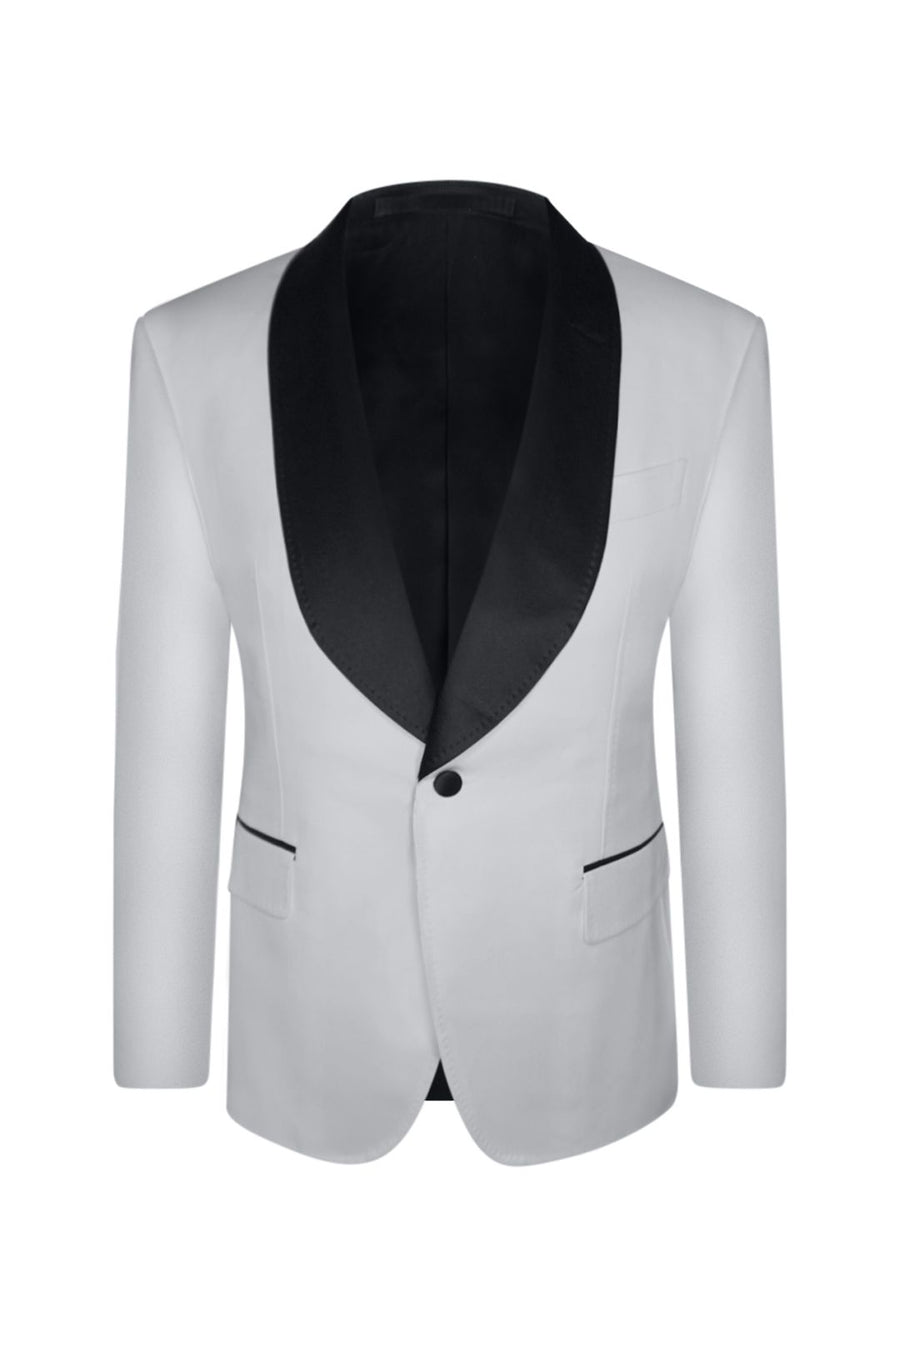 White and Midnight Black Slim Fit Tuxedo Jacket (Satin Lapel)